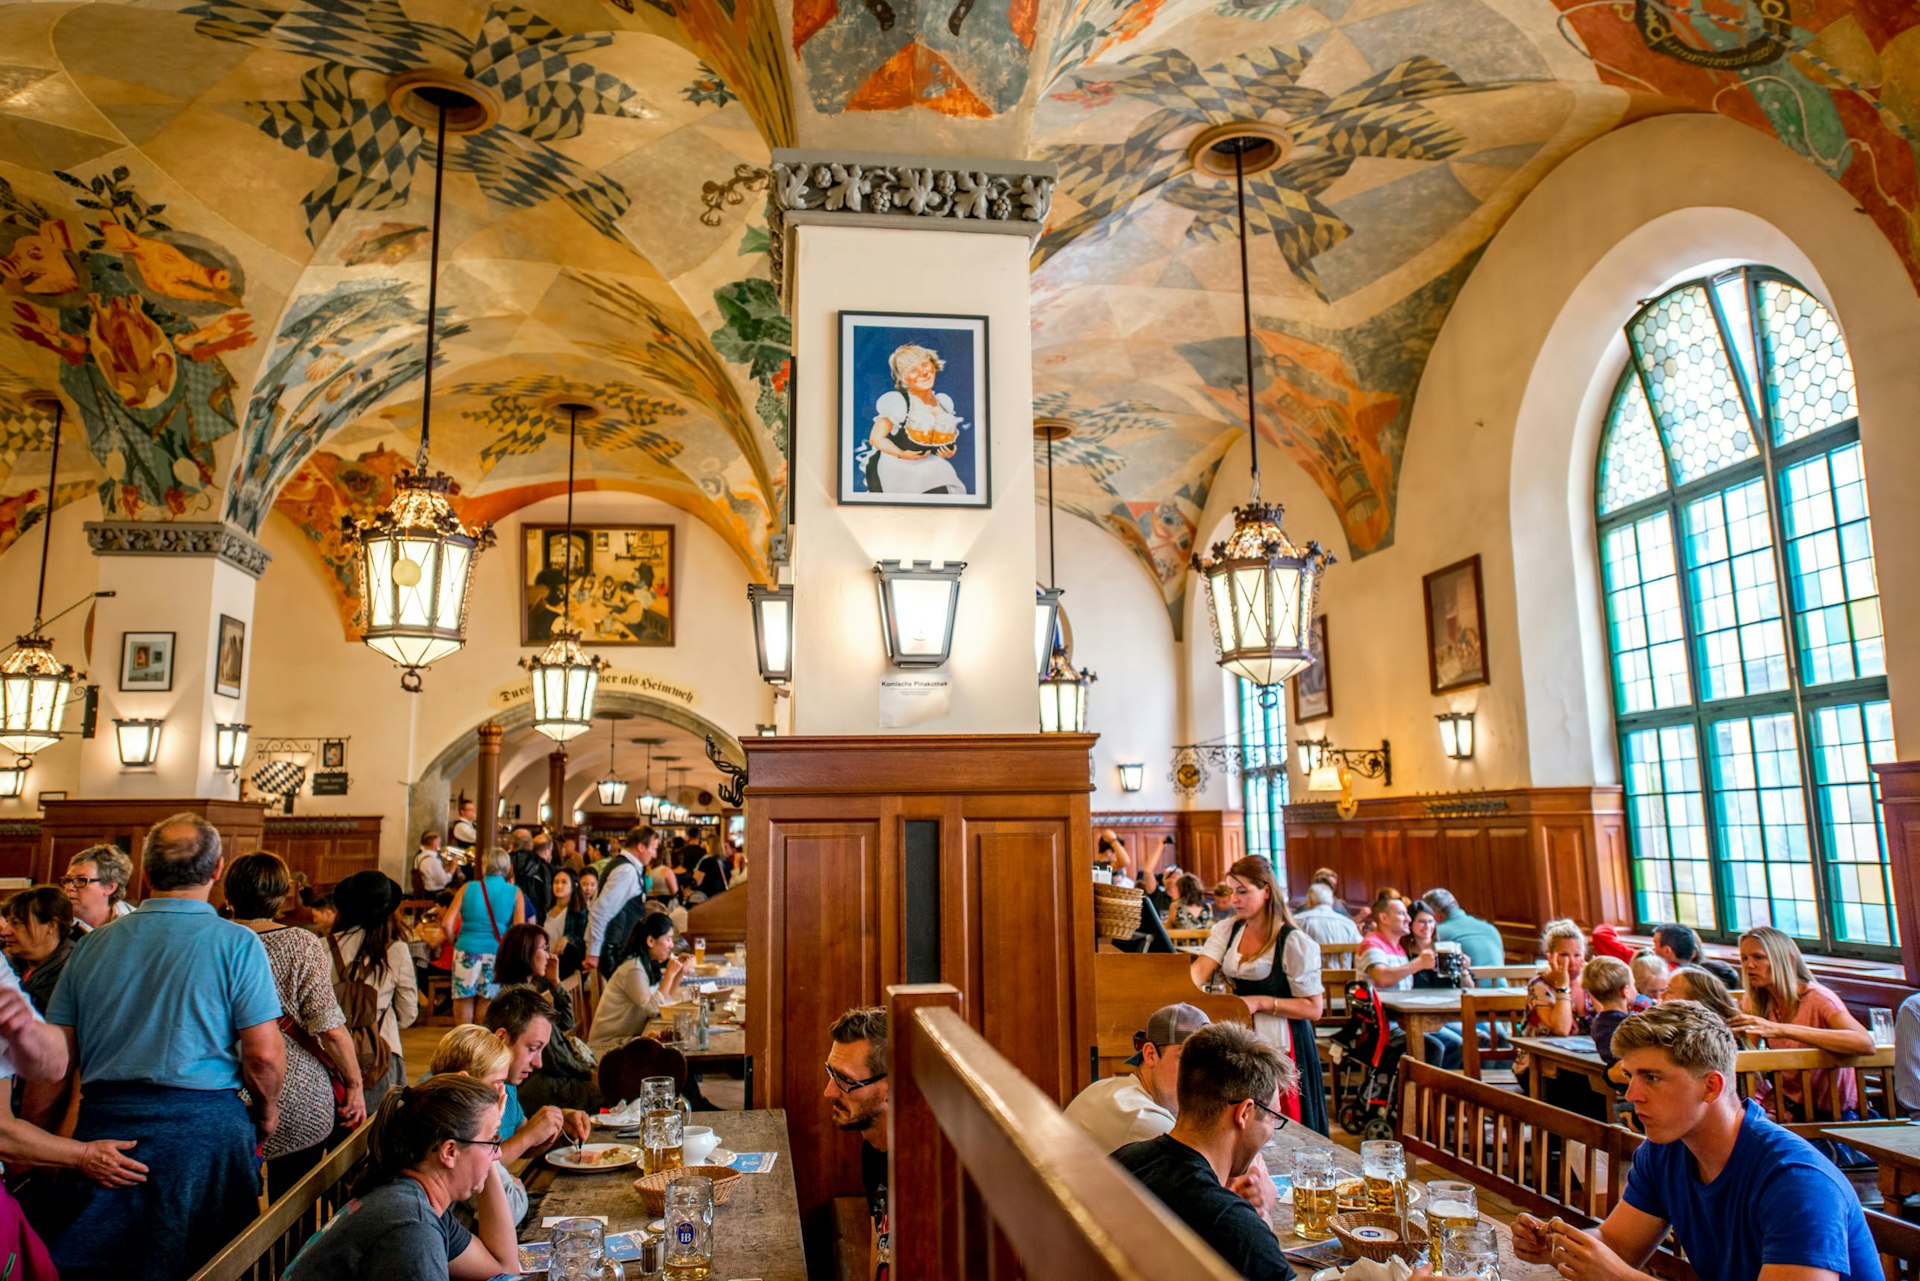 Interior of the Hofbrauhaus pub in Munich